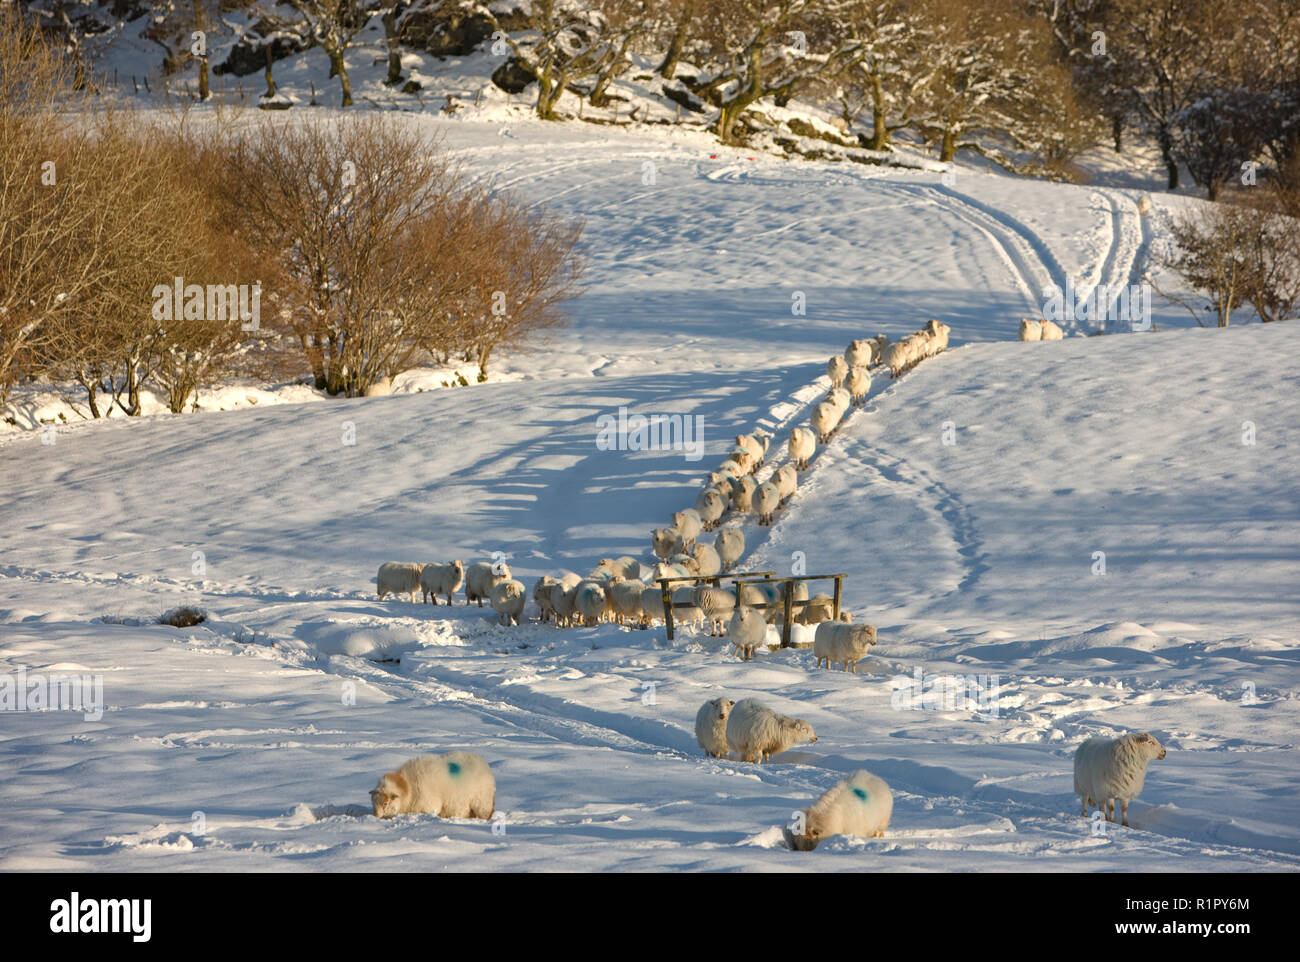 Sheep on snow Stock Photo